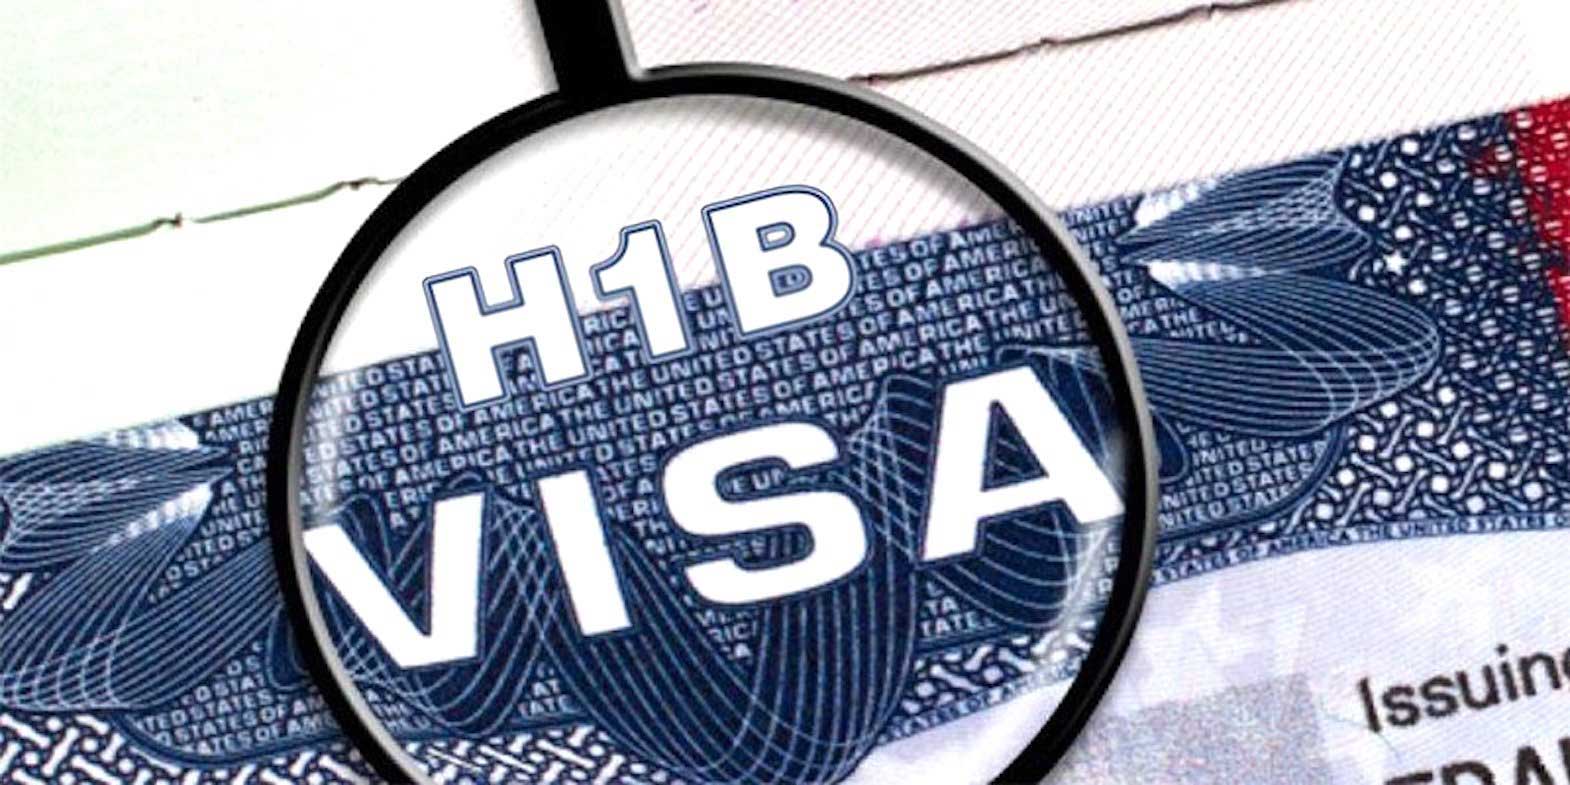 h1b visa travel requirements